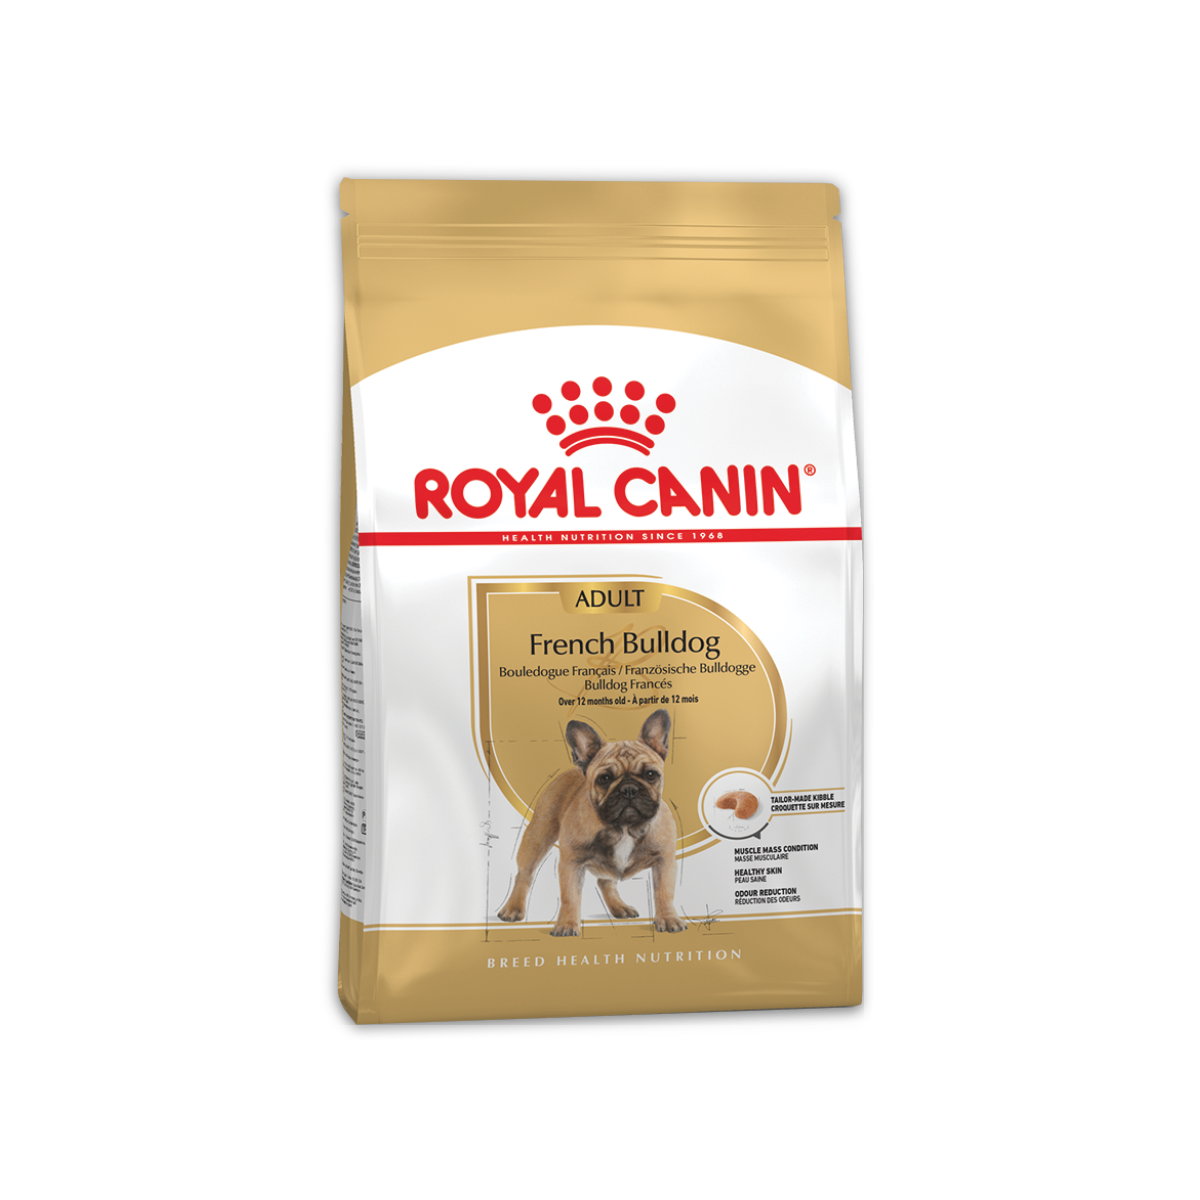 Royal Canin French Bulldog Adult โรยัล คานิน อาหารสำหรับสุนัขโตพันธุ์ เฟรนช บลูด็อก อายุ 12 เดือนขึ้นไป